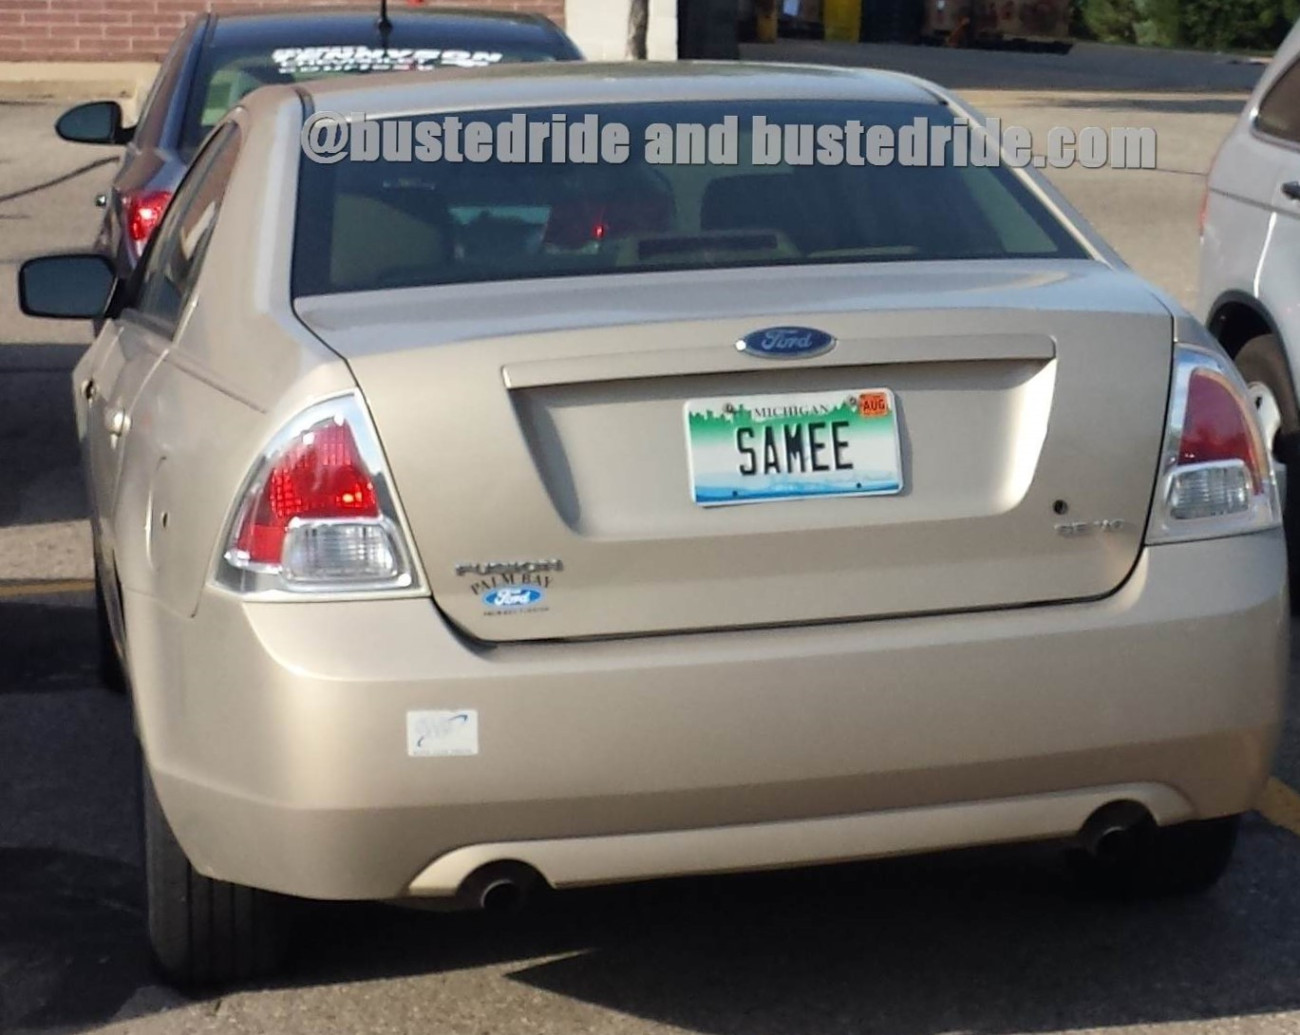 Samee - Vanity License Plate by Busted Ride